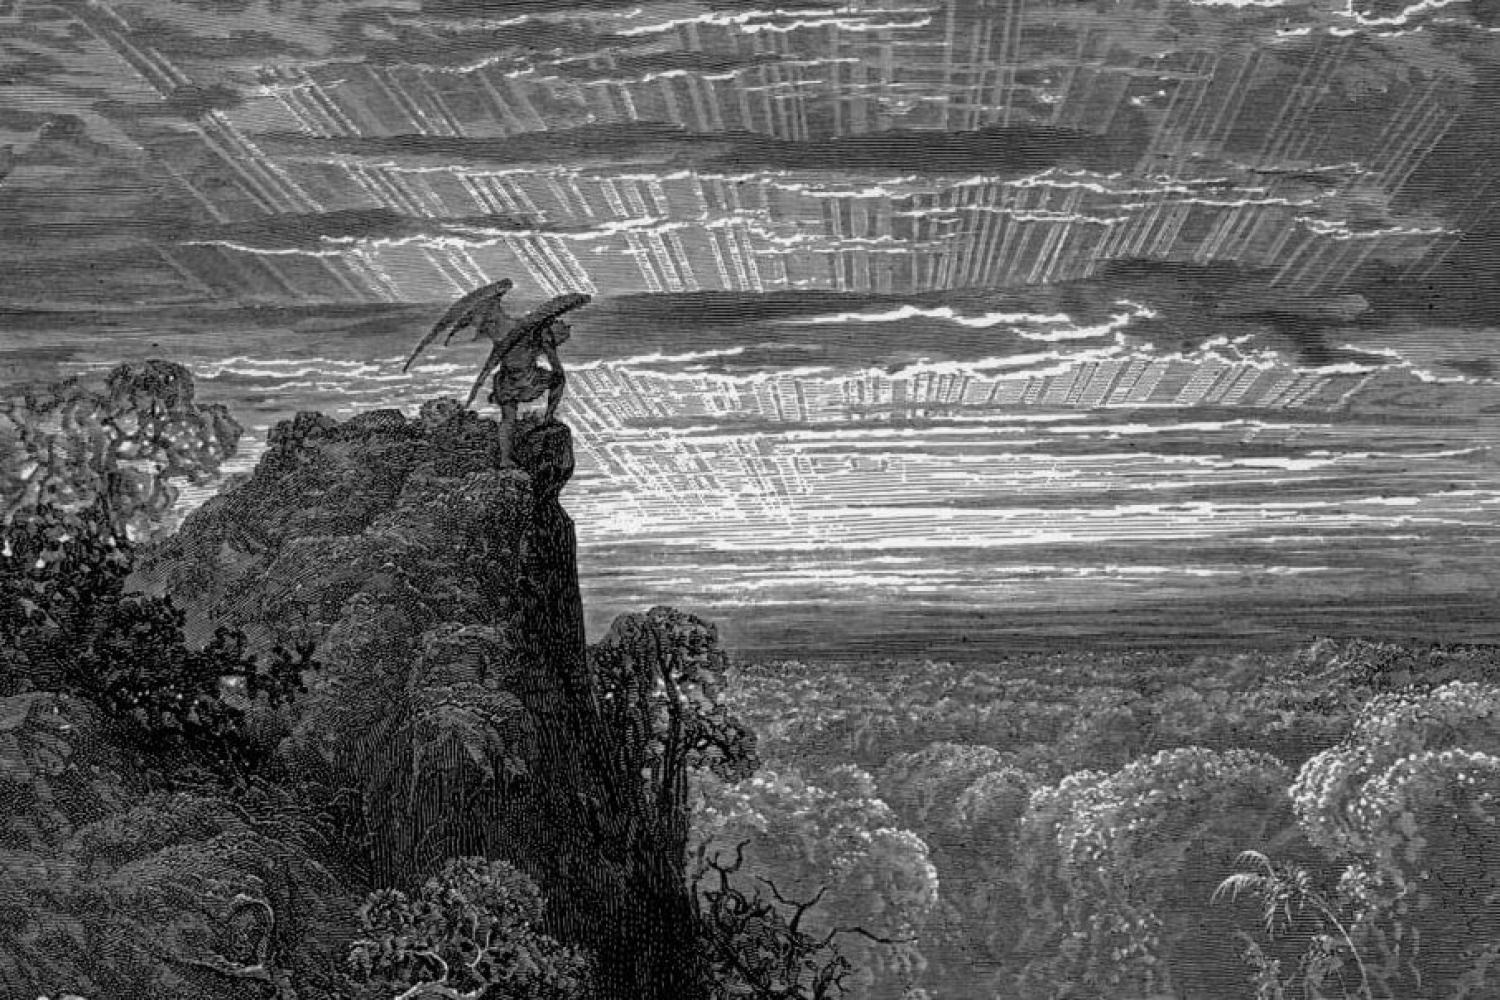 "Satan Makes His Way through Eden," by Gustave Dore